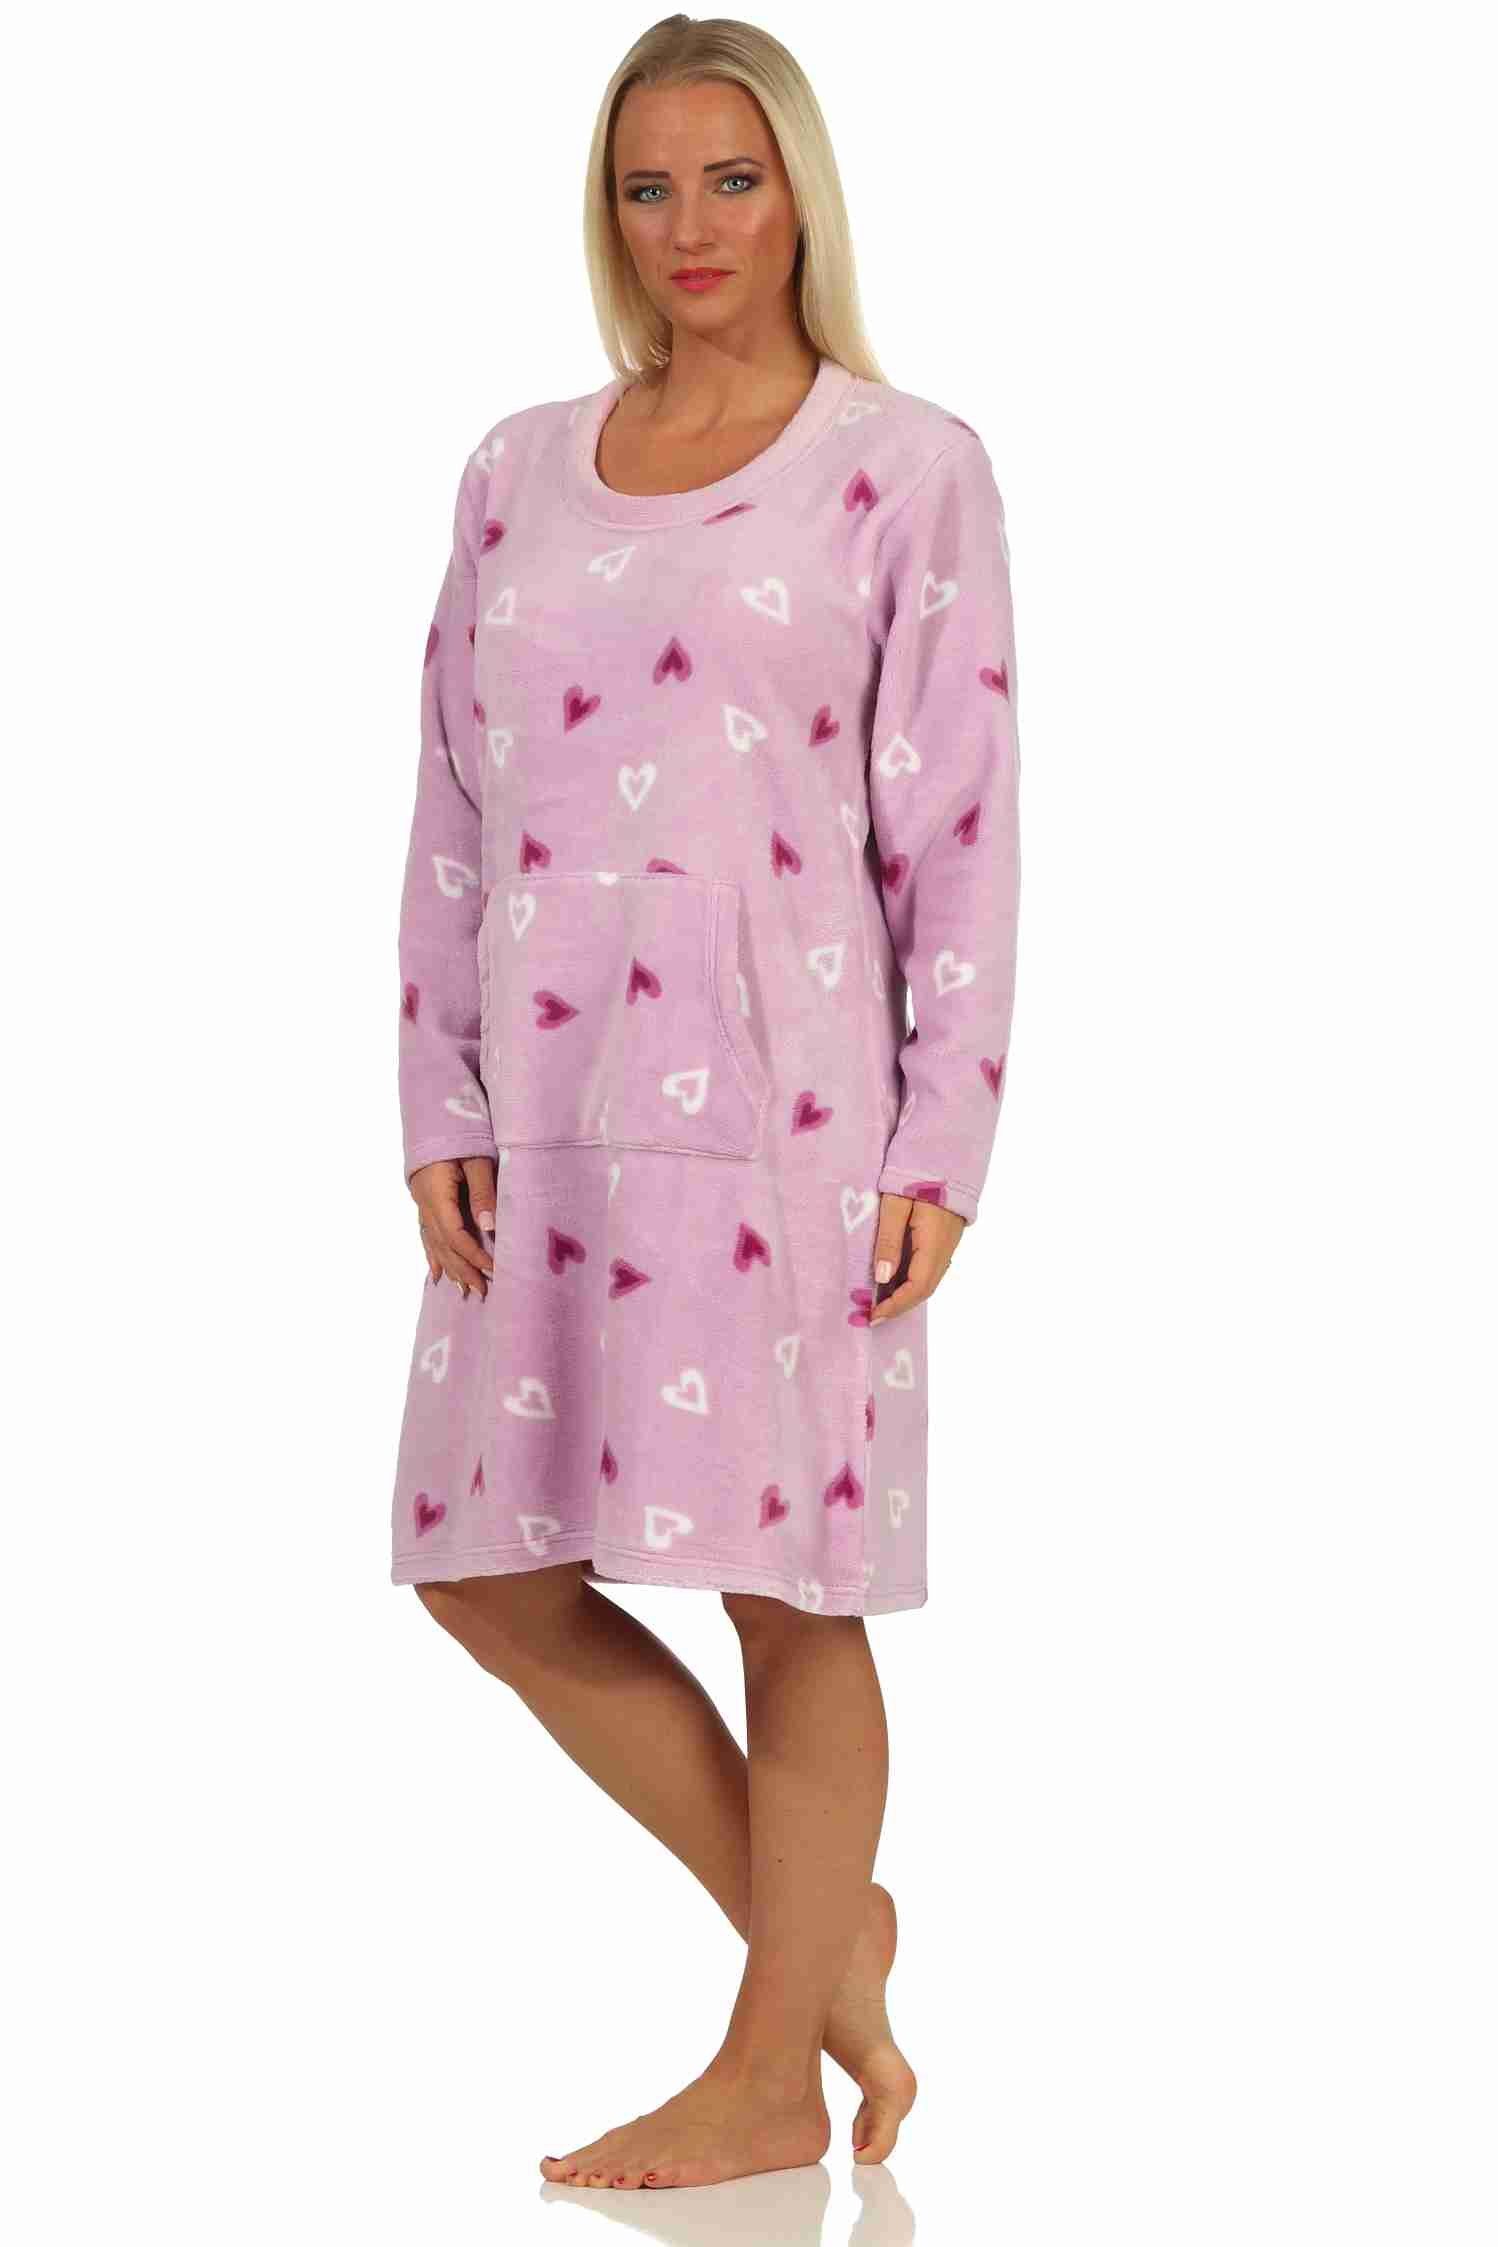 Normann Nachthemd Damen Nachthemd Hauskleid aus softem Coralfleece in  toller Herz-Motiv Optik - 202 97 954